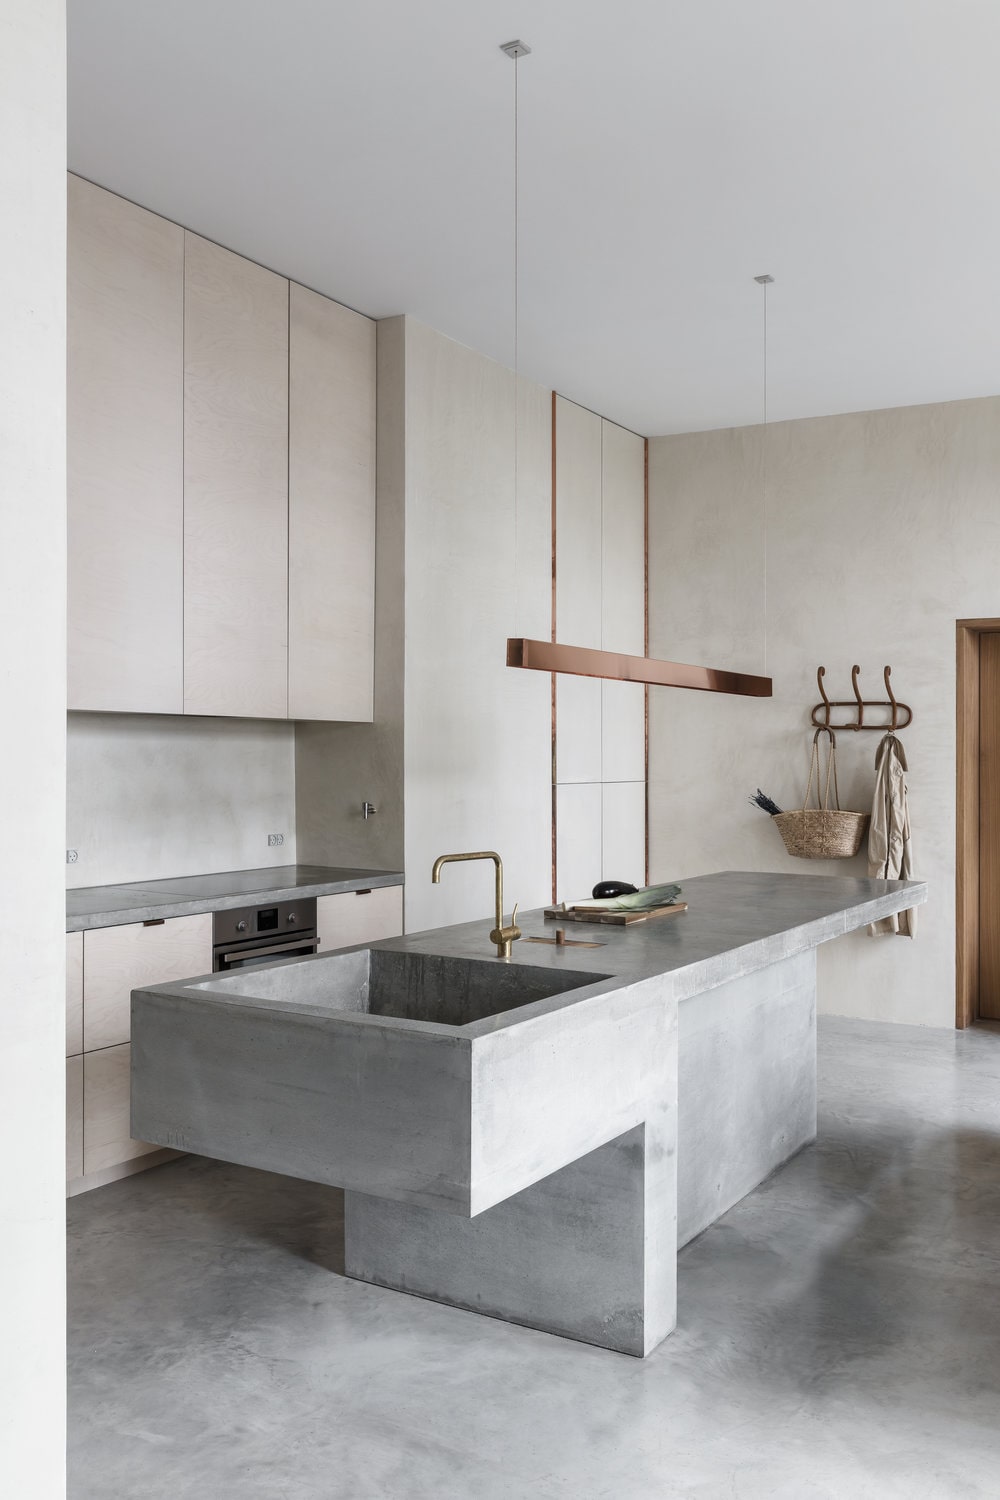 Home & Studio Of Mar Plus Ask in Berlin - Interior Design - Design ...